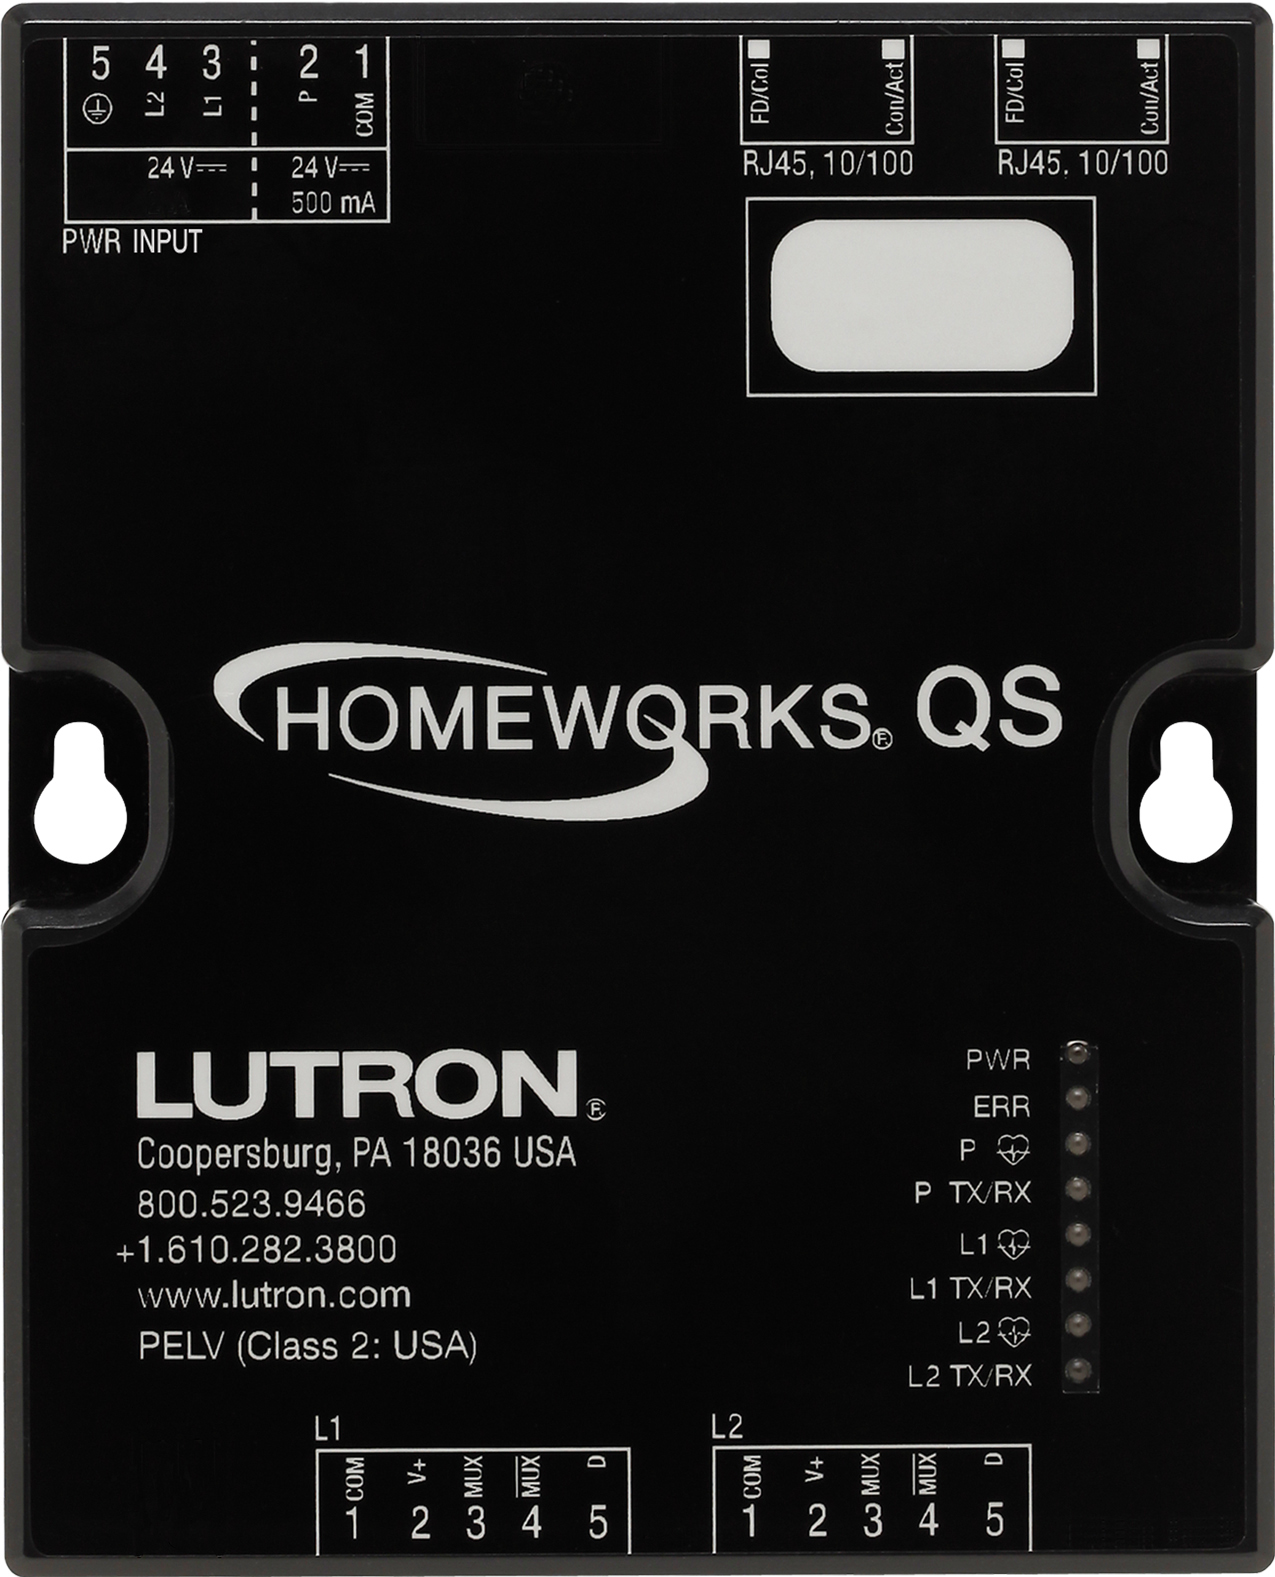 download lutron homeworks interactive software